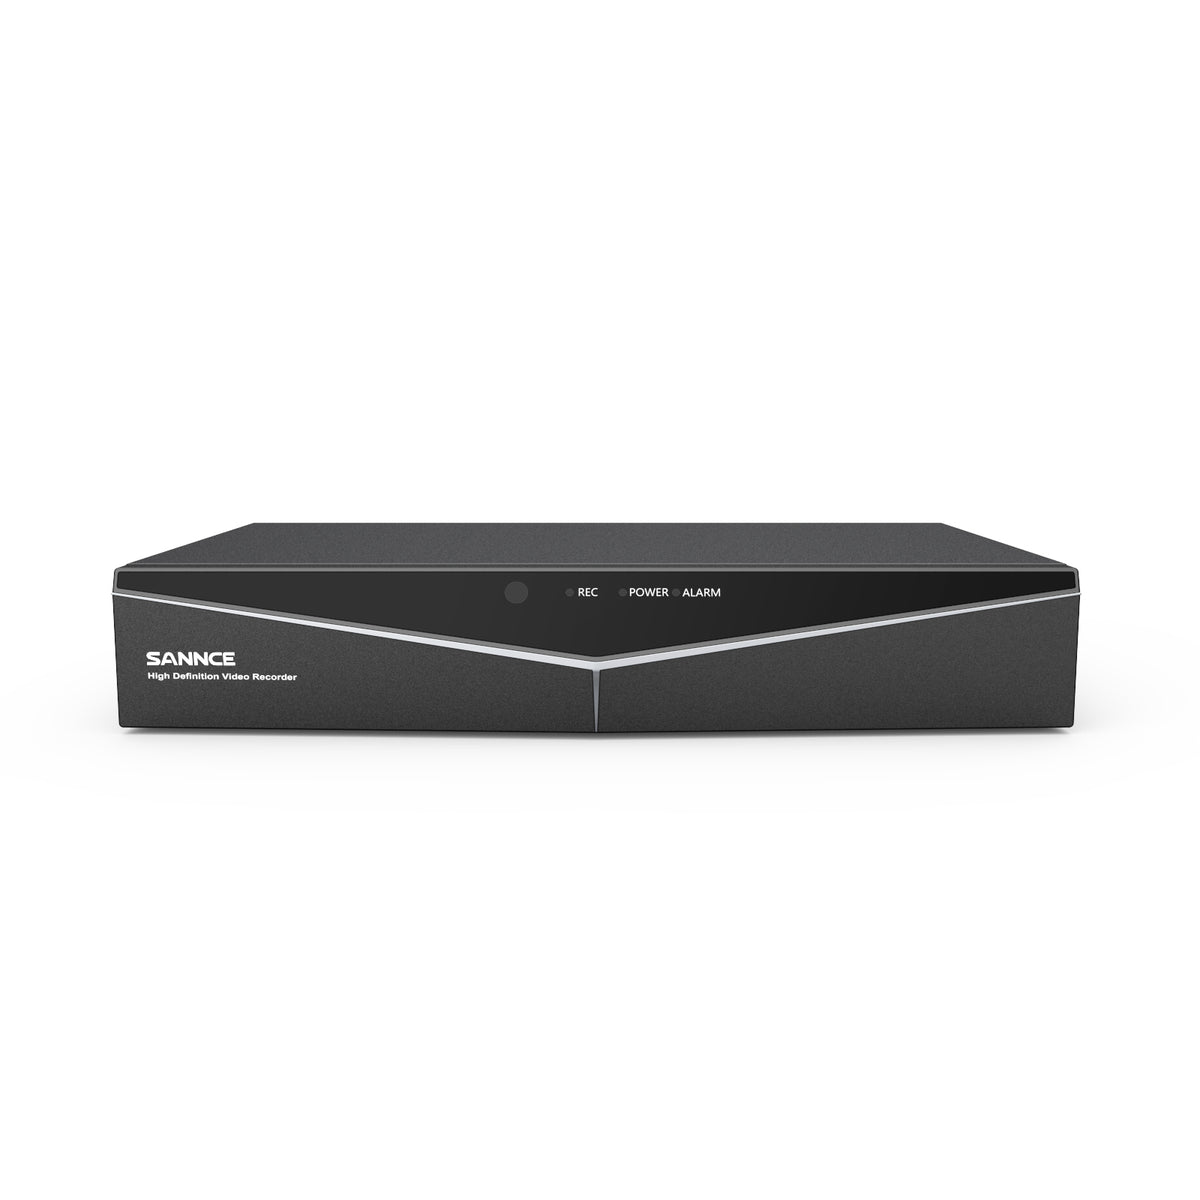 1080P 8 Channel Security DVR - Hybrid 5-in-1 Video Recorder, Smart Motion Detection, Smart Playback & USB Backup